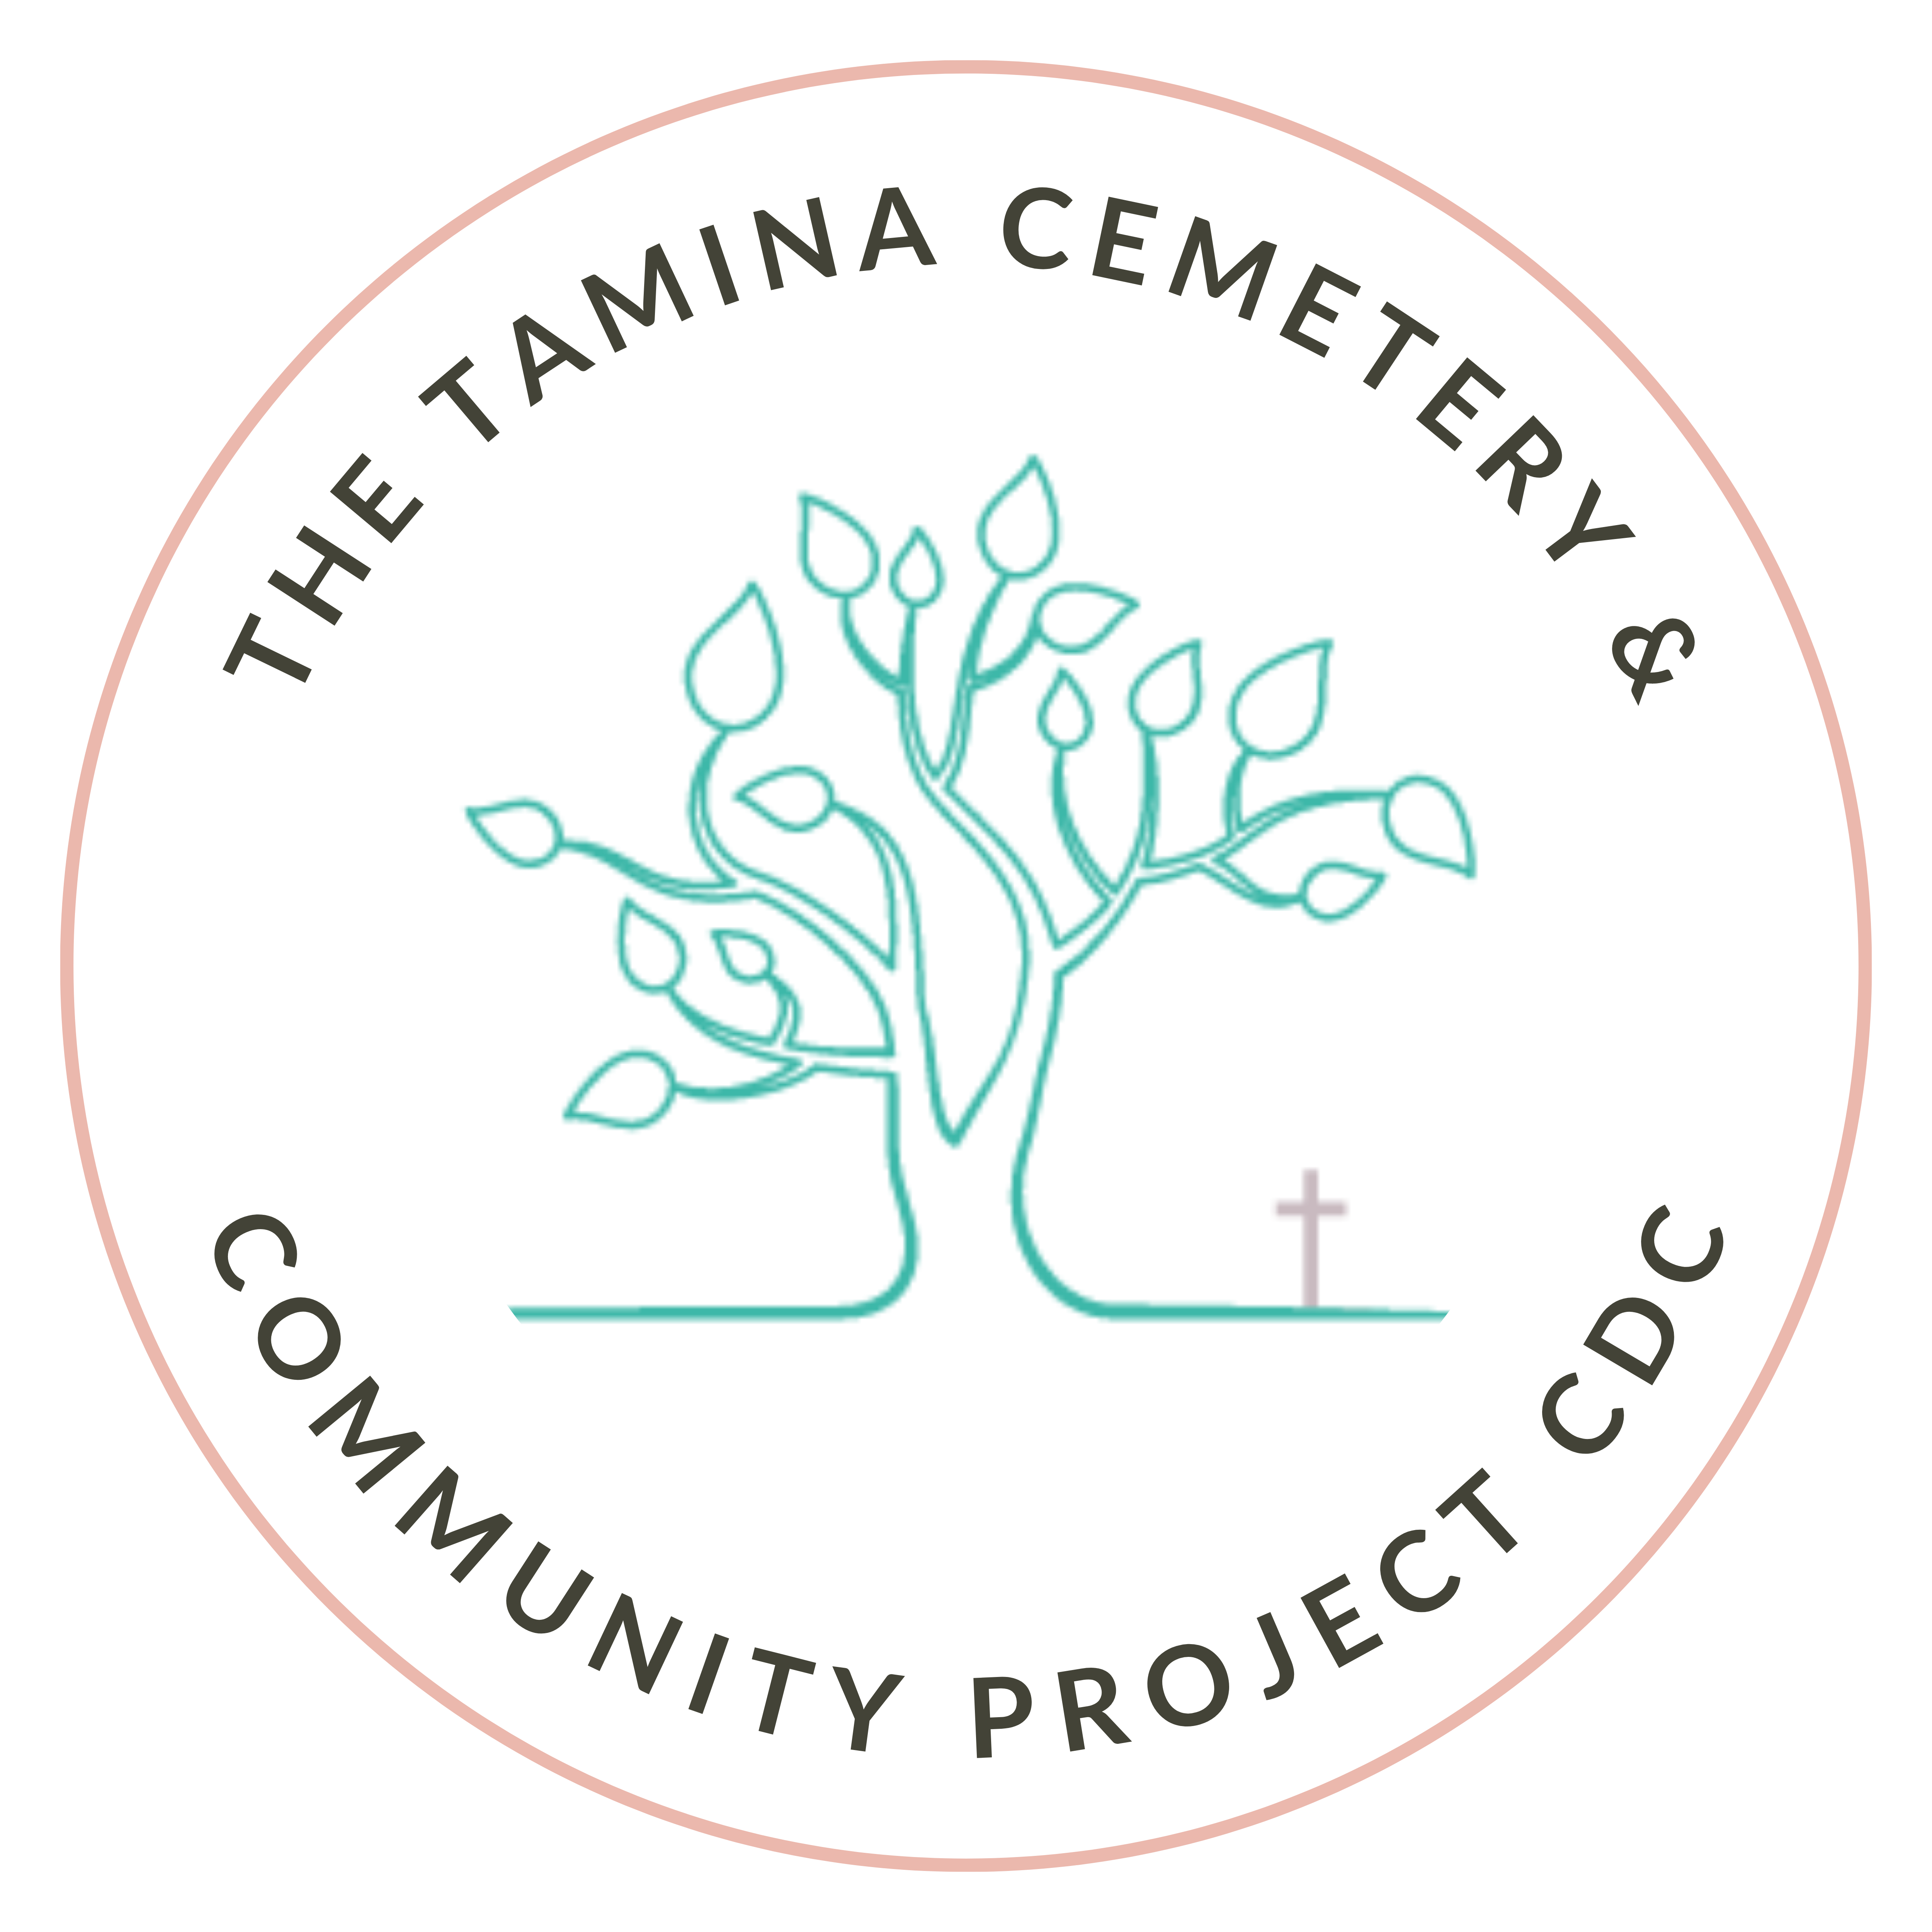 Tamina Cemetery & Community Project CDC